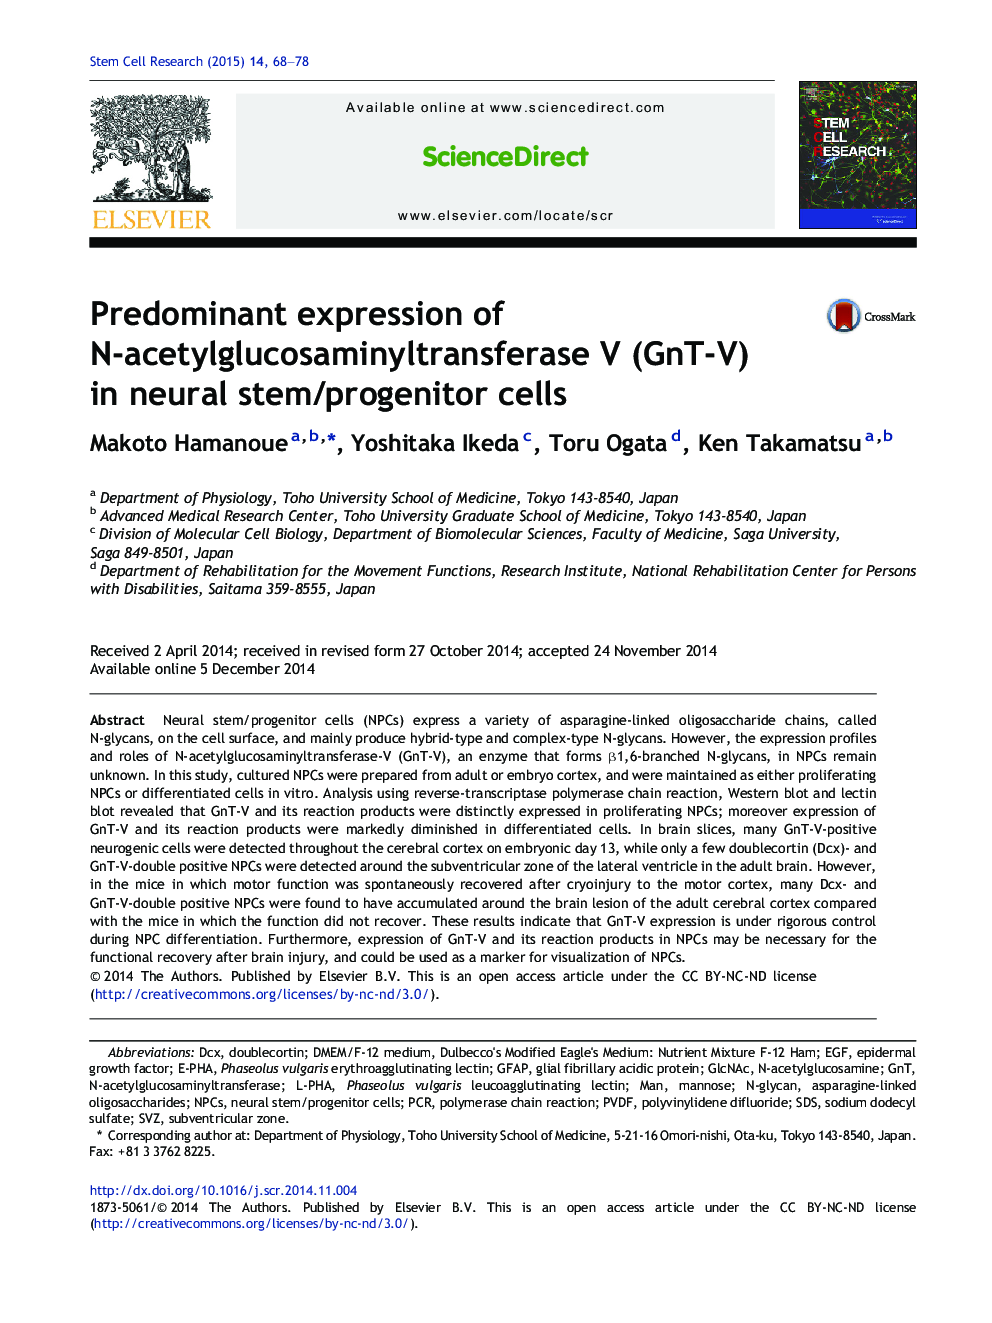 Predominant expression of N-acetylglucosaminyltransferase V (GnT-V) in neural stem/progenitor cells